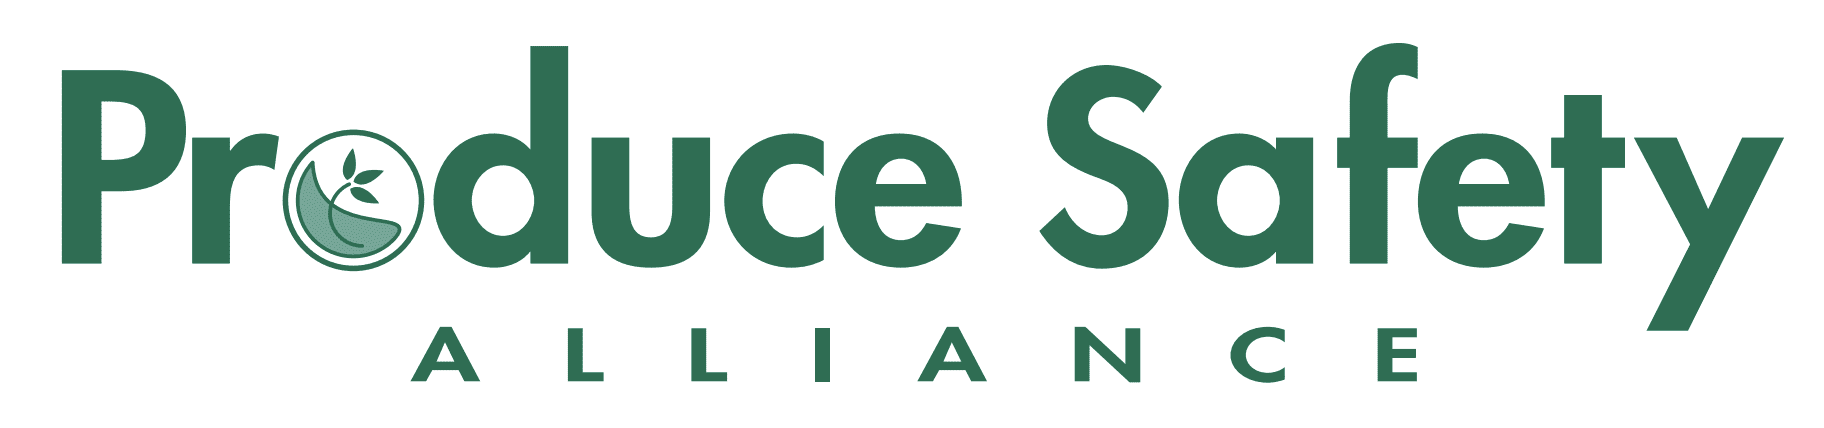 Produce safety alliance logo